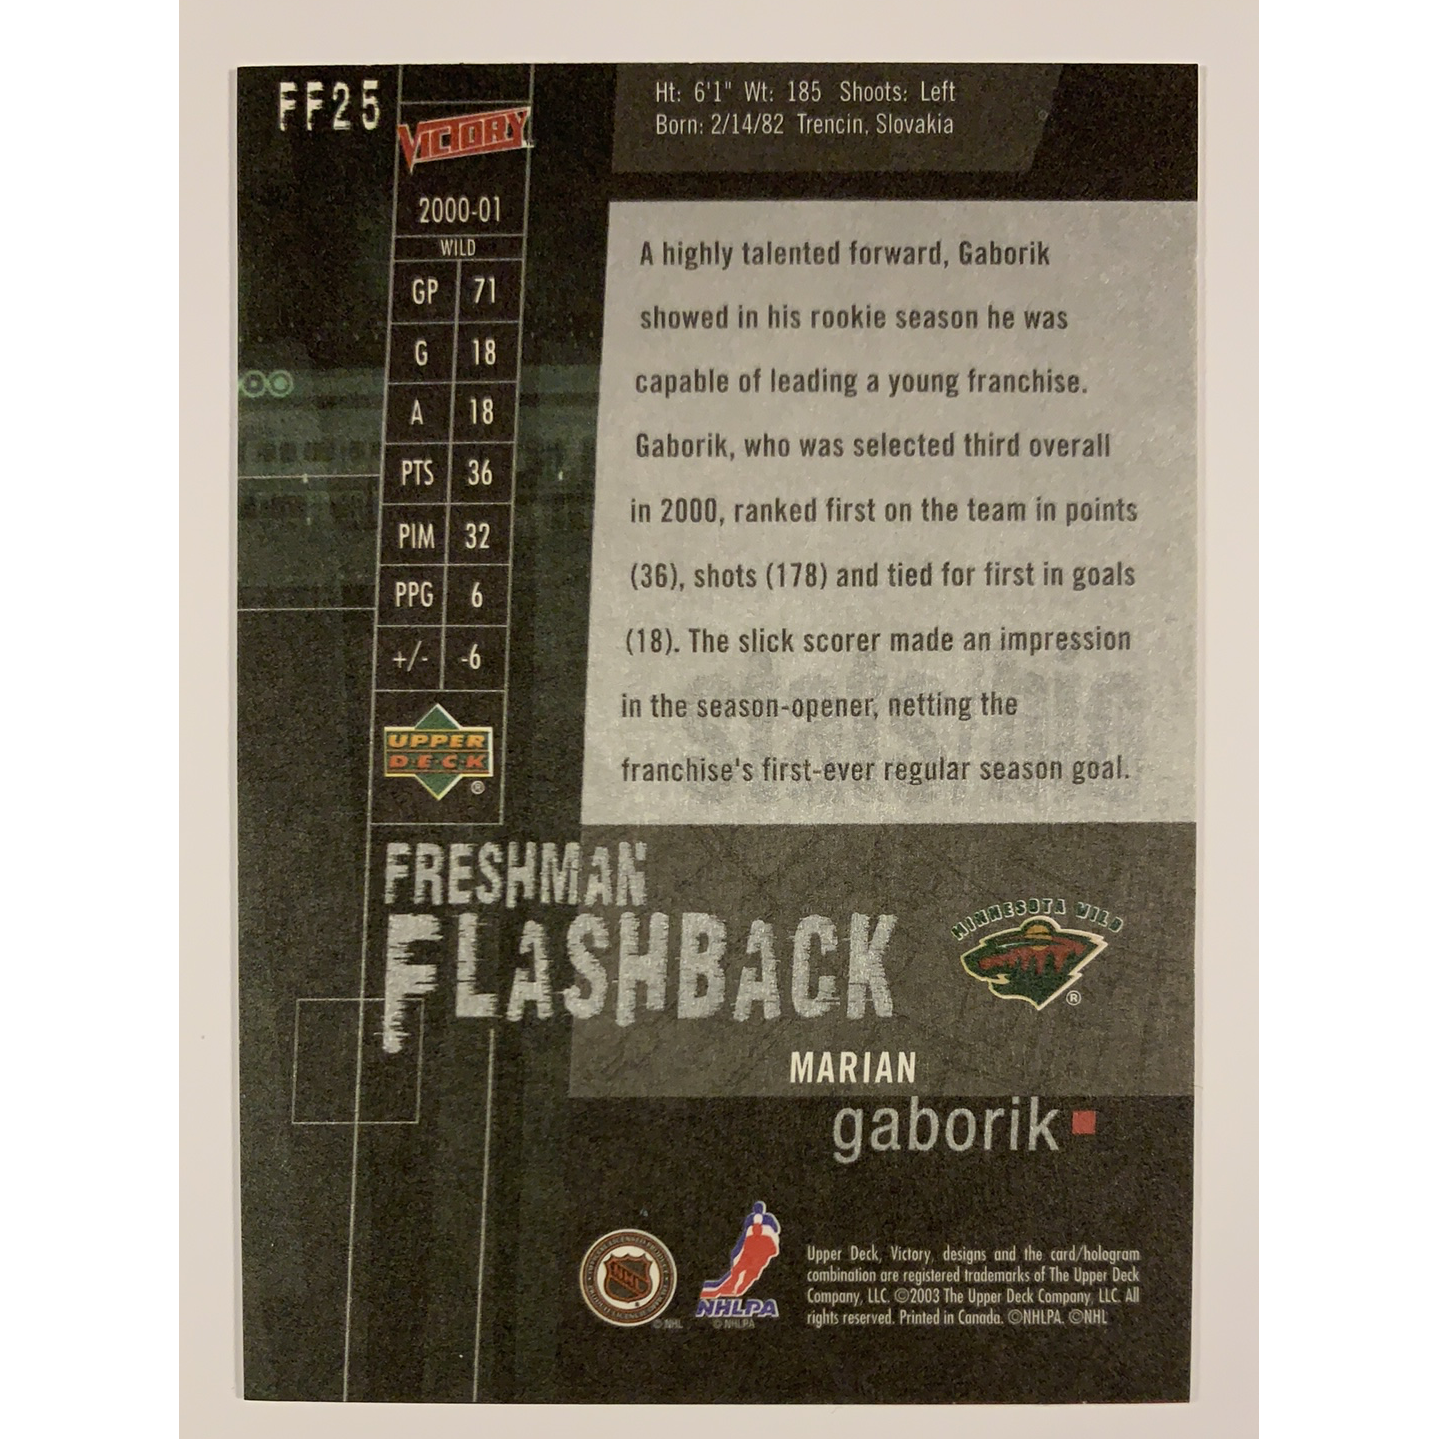  2003-04 Upper Deck Victory Marian Gaborik Freshman Flashback  Local Legends Cards & Collectibles